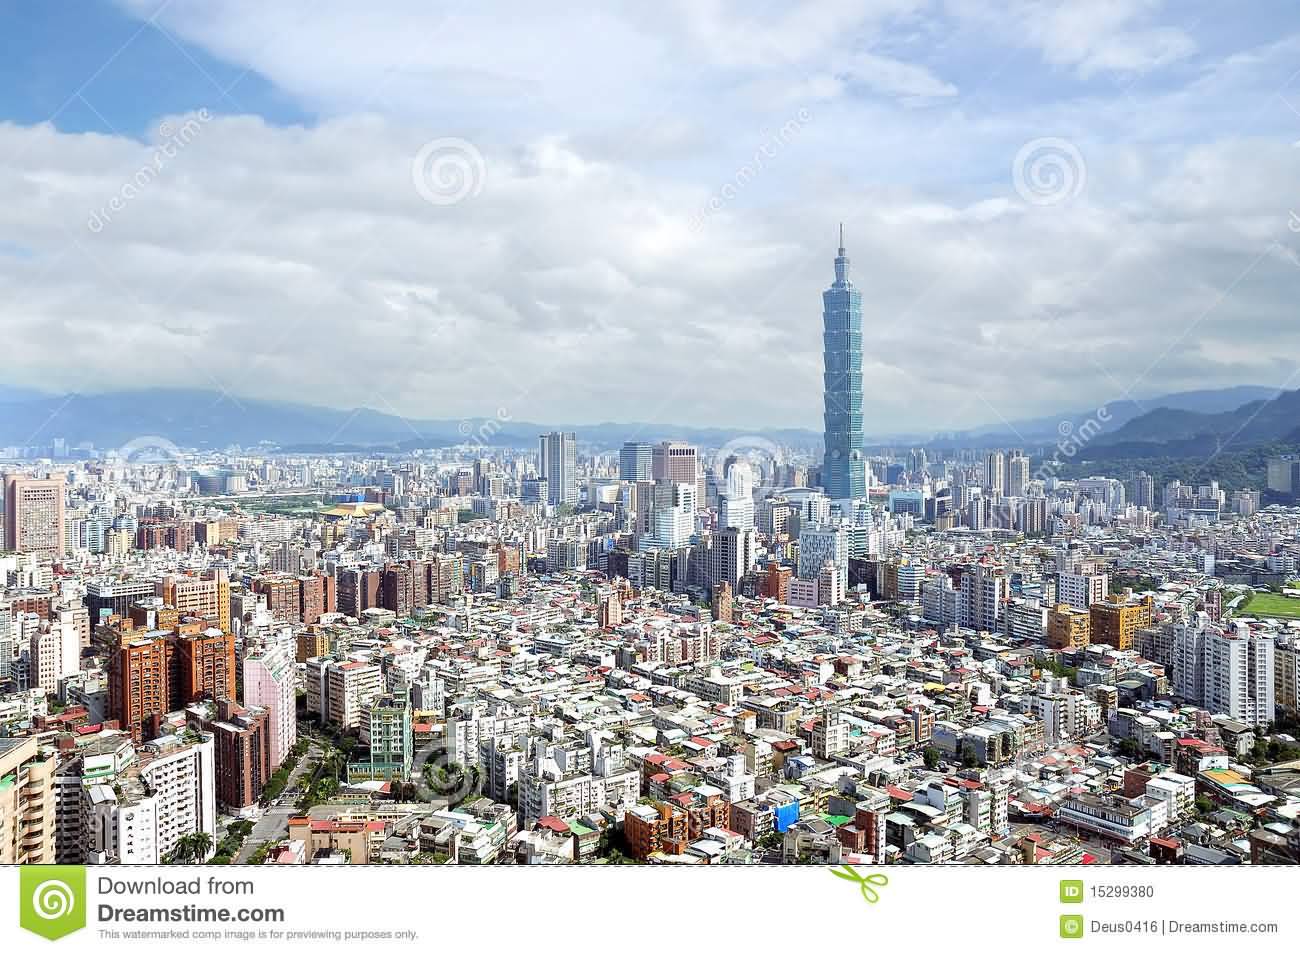 Taipei 101 Tower And City View